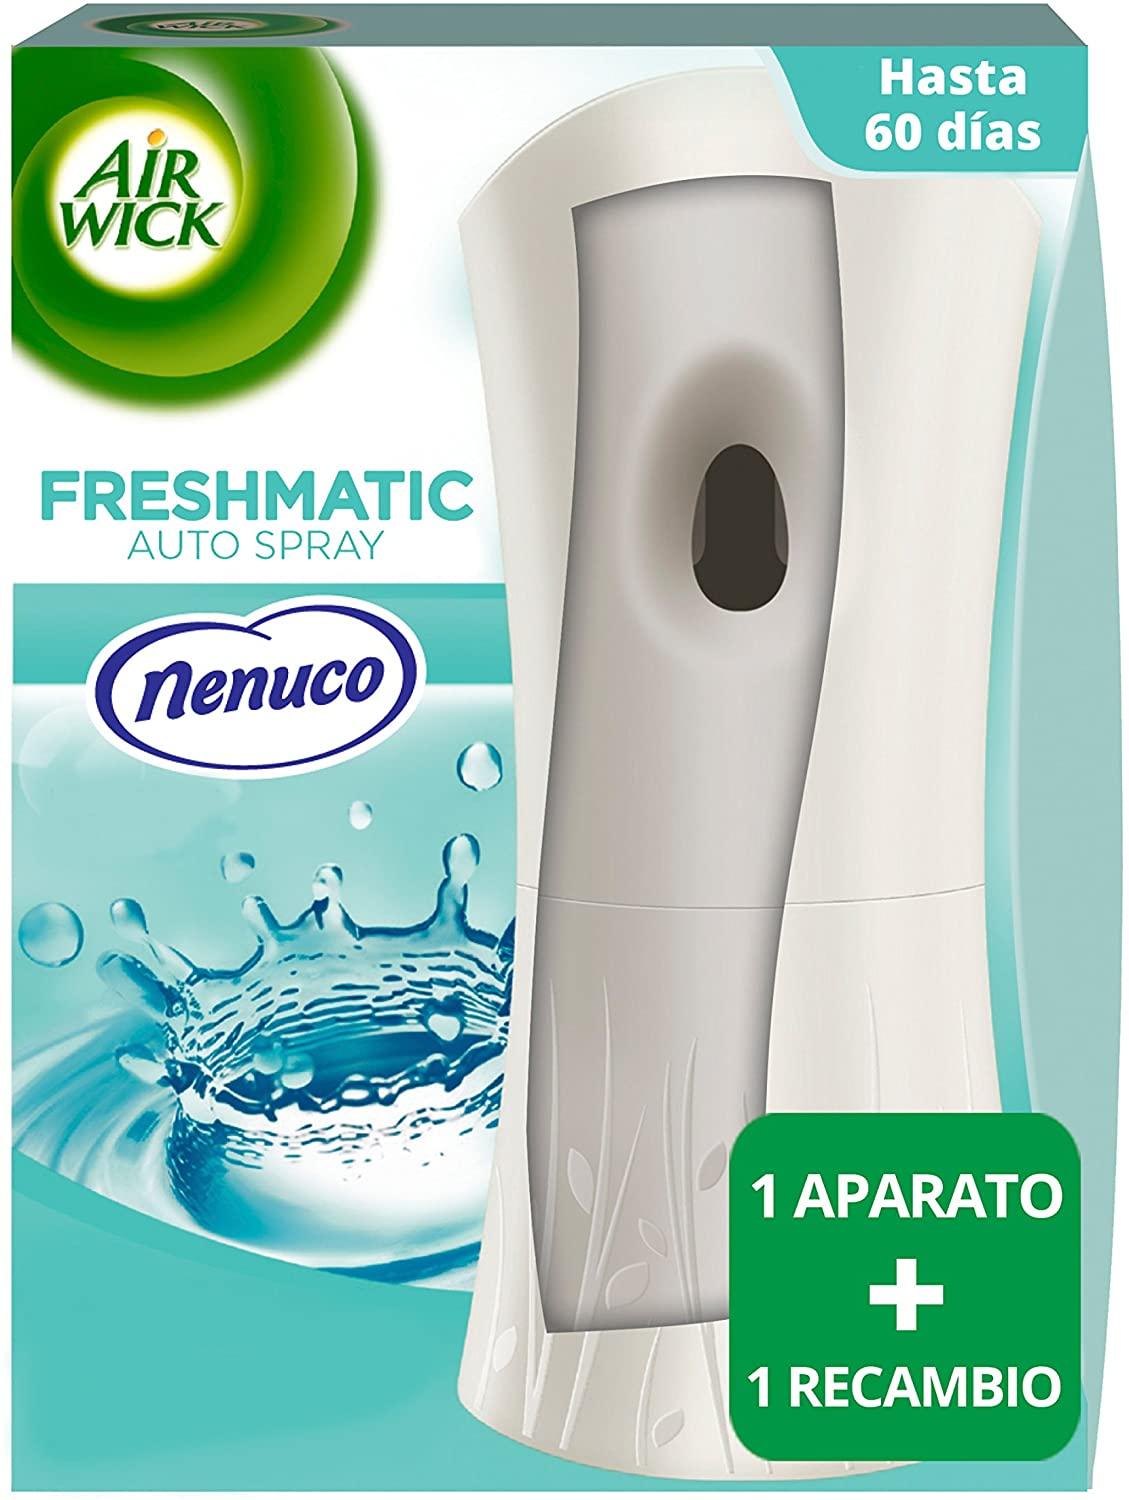 Air wick fresmatic Aparato Nenuco 